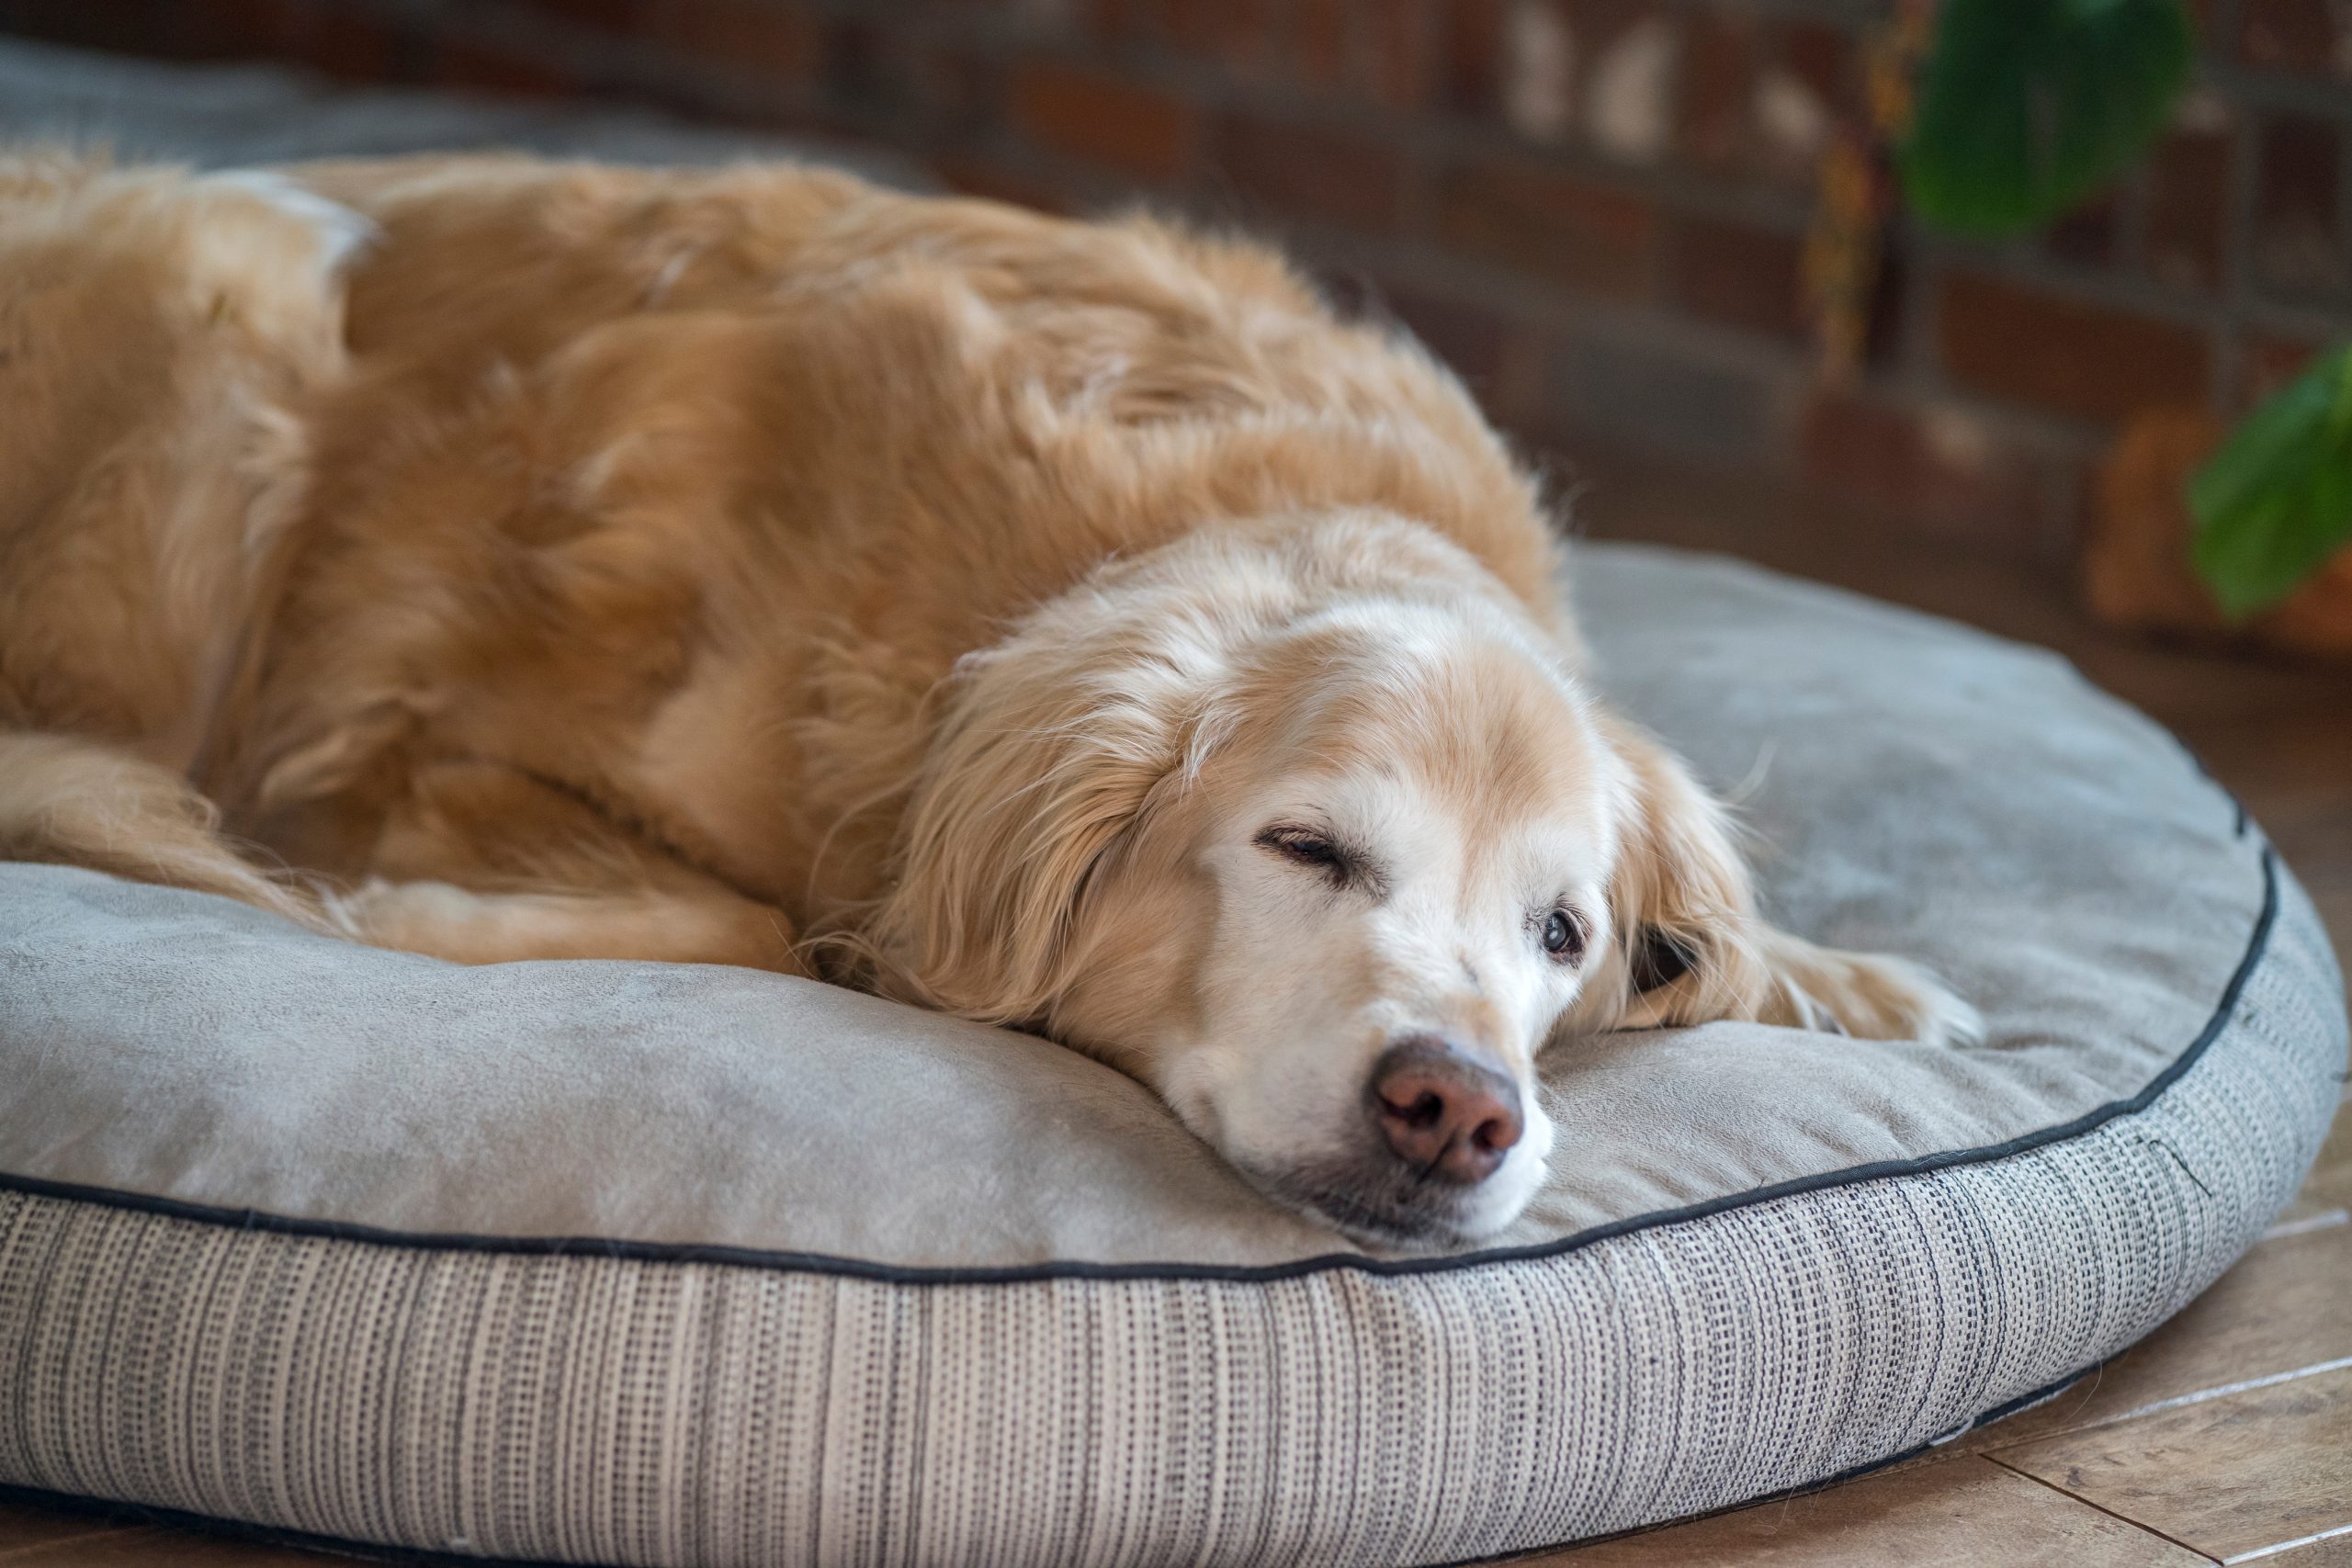 Senior Golden Retriever dog resting on a bed